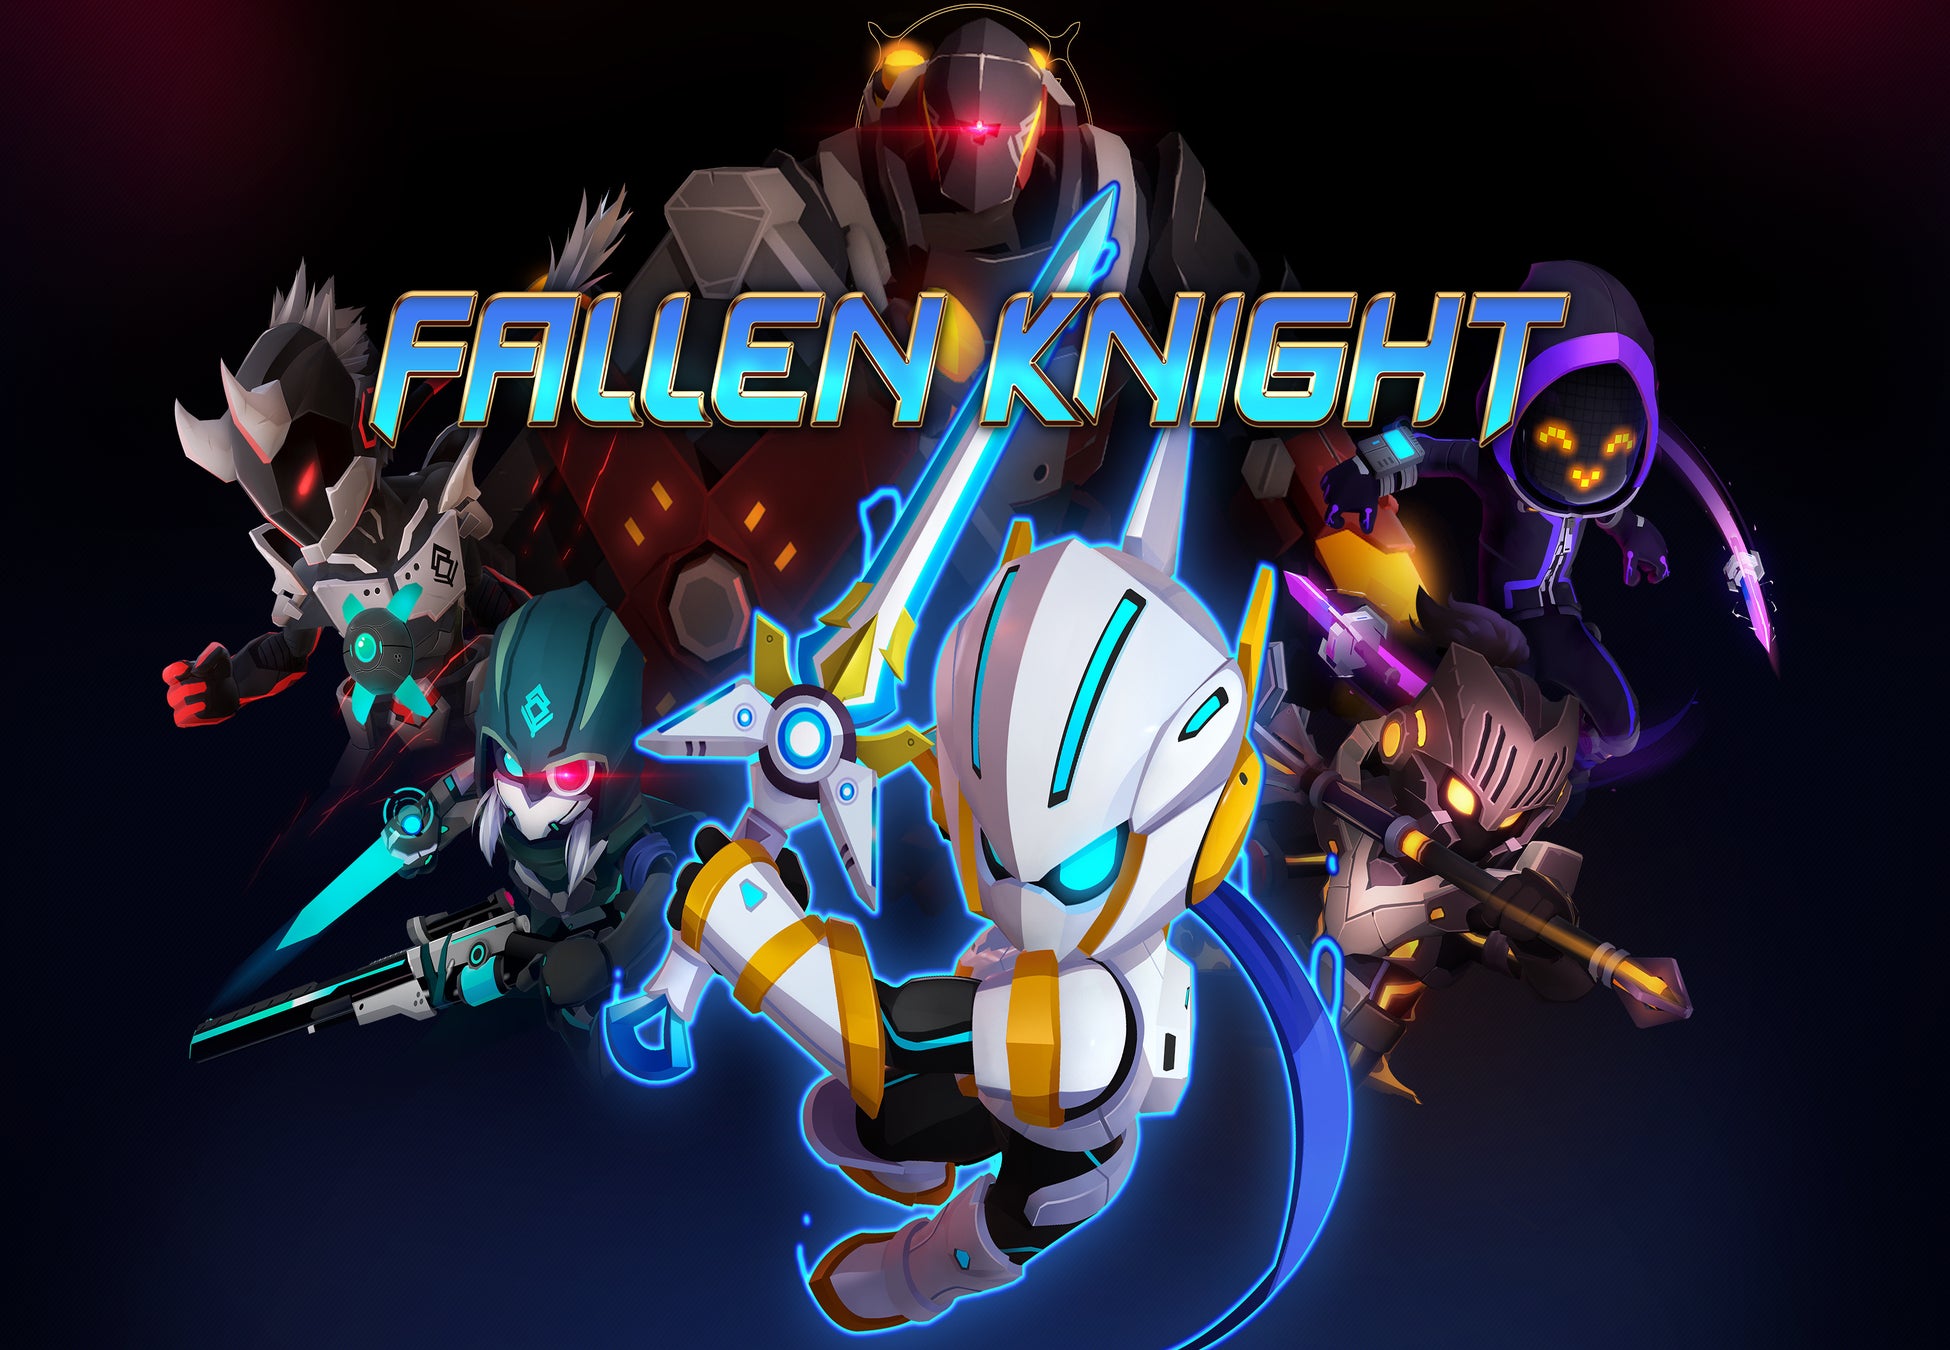 『Fallen Knight - フォールンナイト -』がNintendo Switch™、PlayStation®4で配信開始！新ストーリーや新ステージが登場するDLCも同時配信。プレイヤーの行動によって分岐するエンディングやユニークな戦闘システムが魅力。